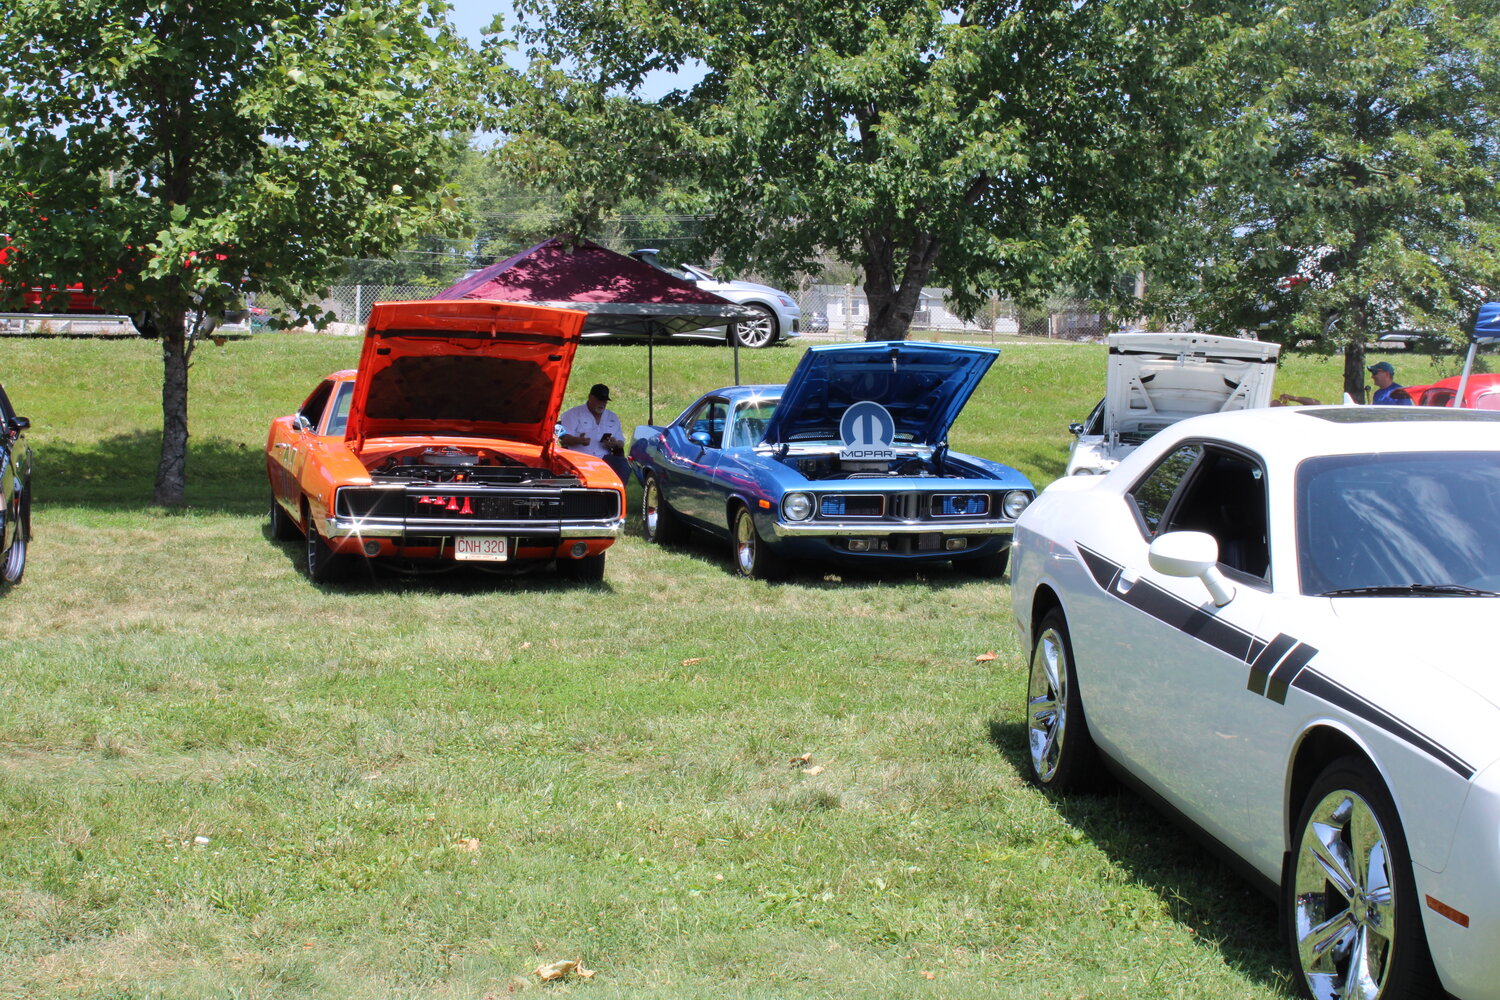 Two more cars were on display at Diekroeger Park.